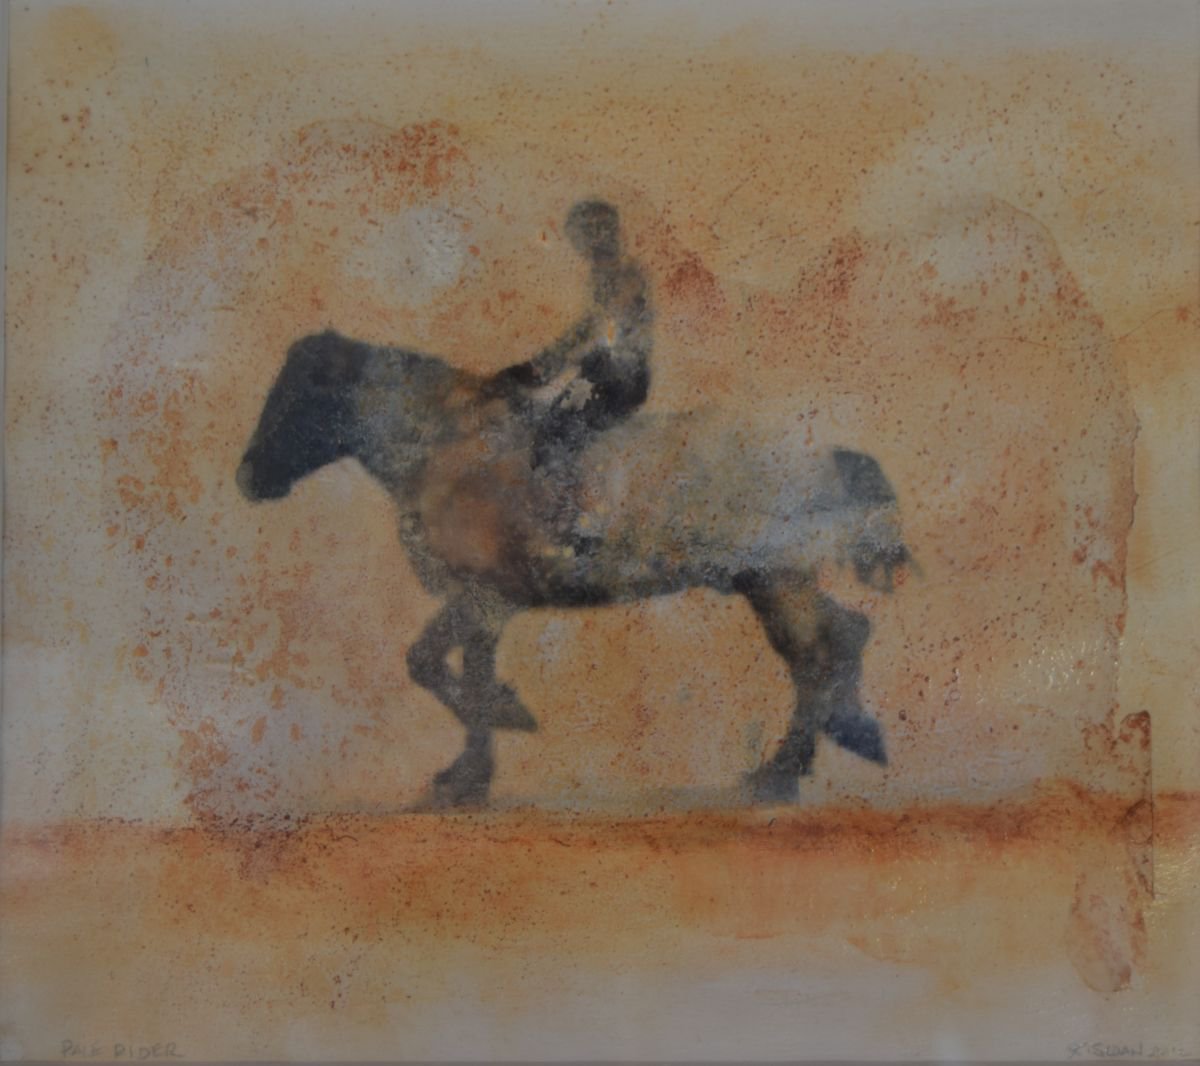 Pale Rider by Karen Sloan